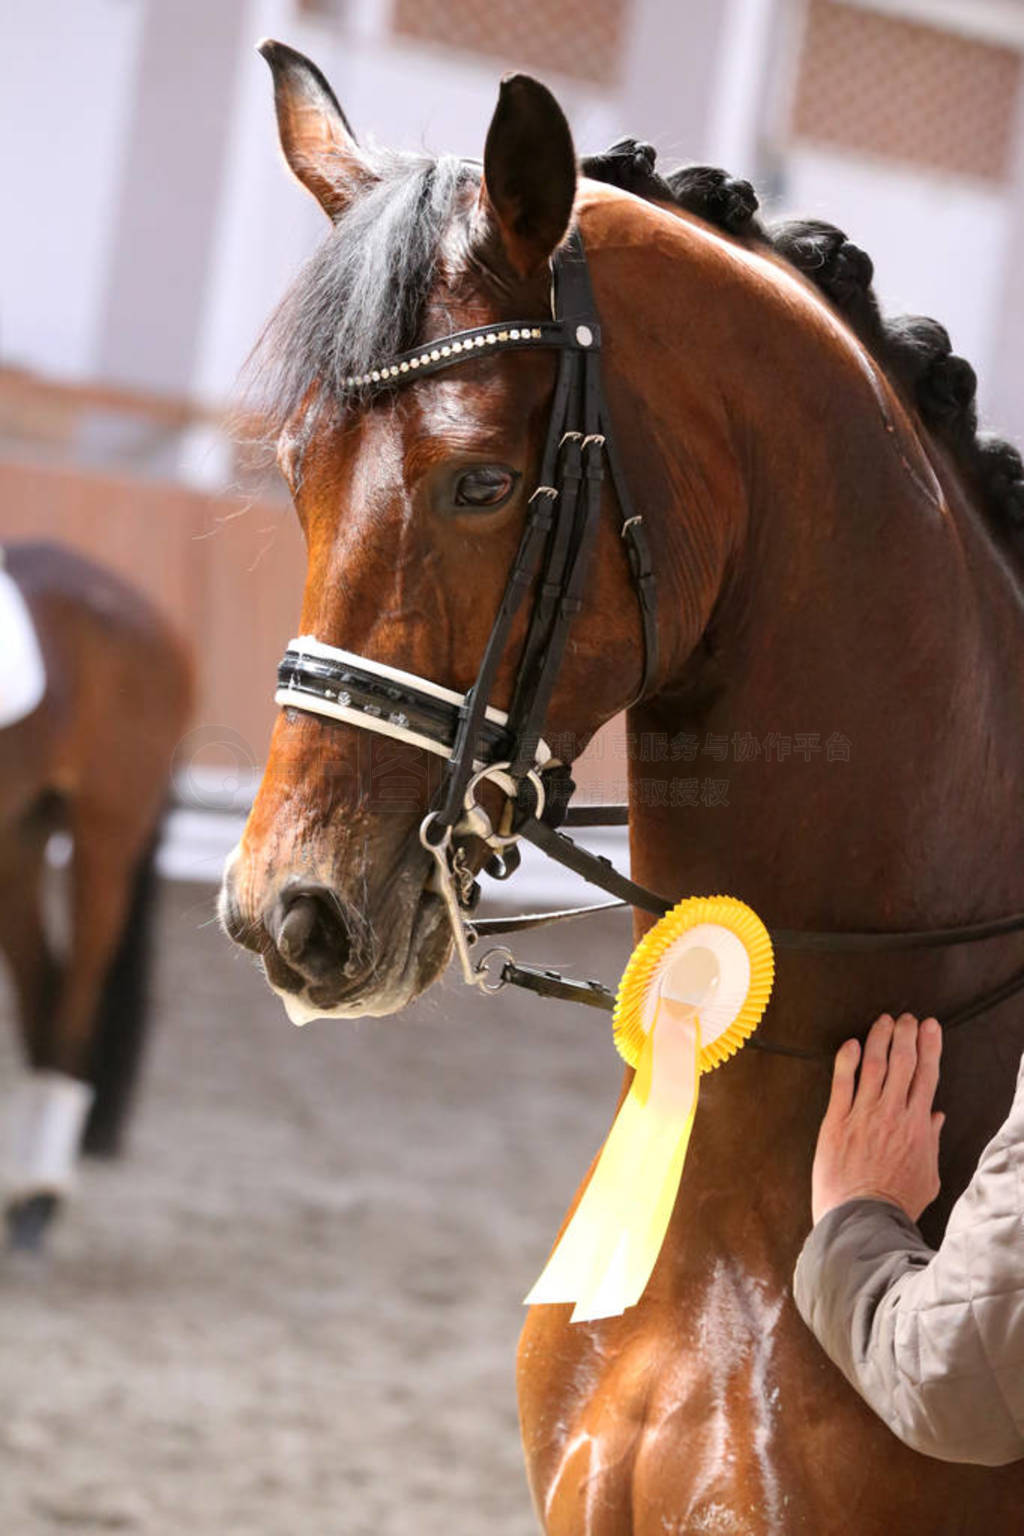 Head shot closeup of a beautiful award winner racehorse